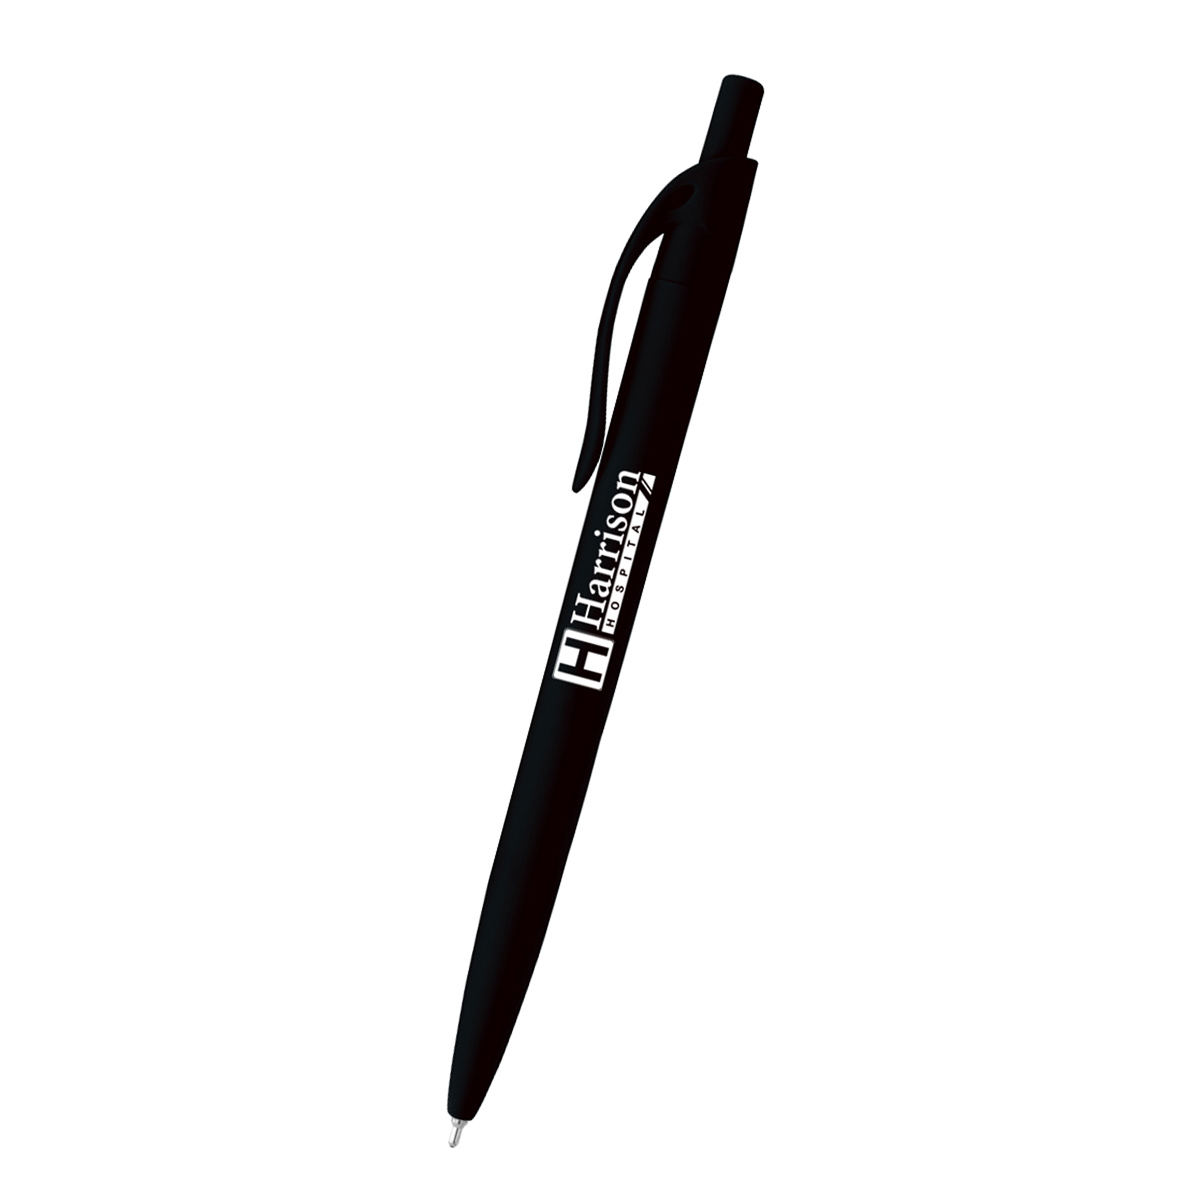 Premium Bally Pen: Your Sleek & Stylish Writing Partner